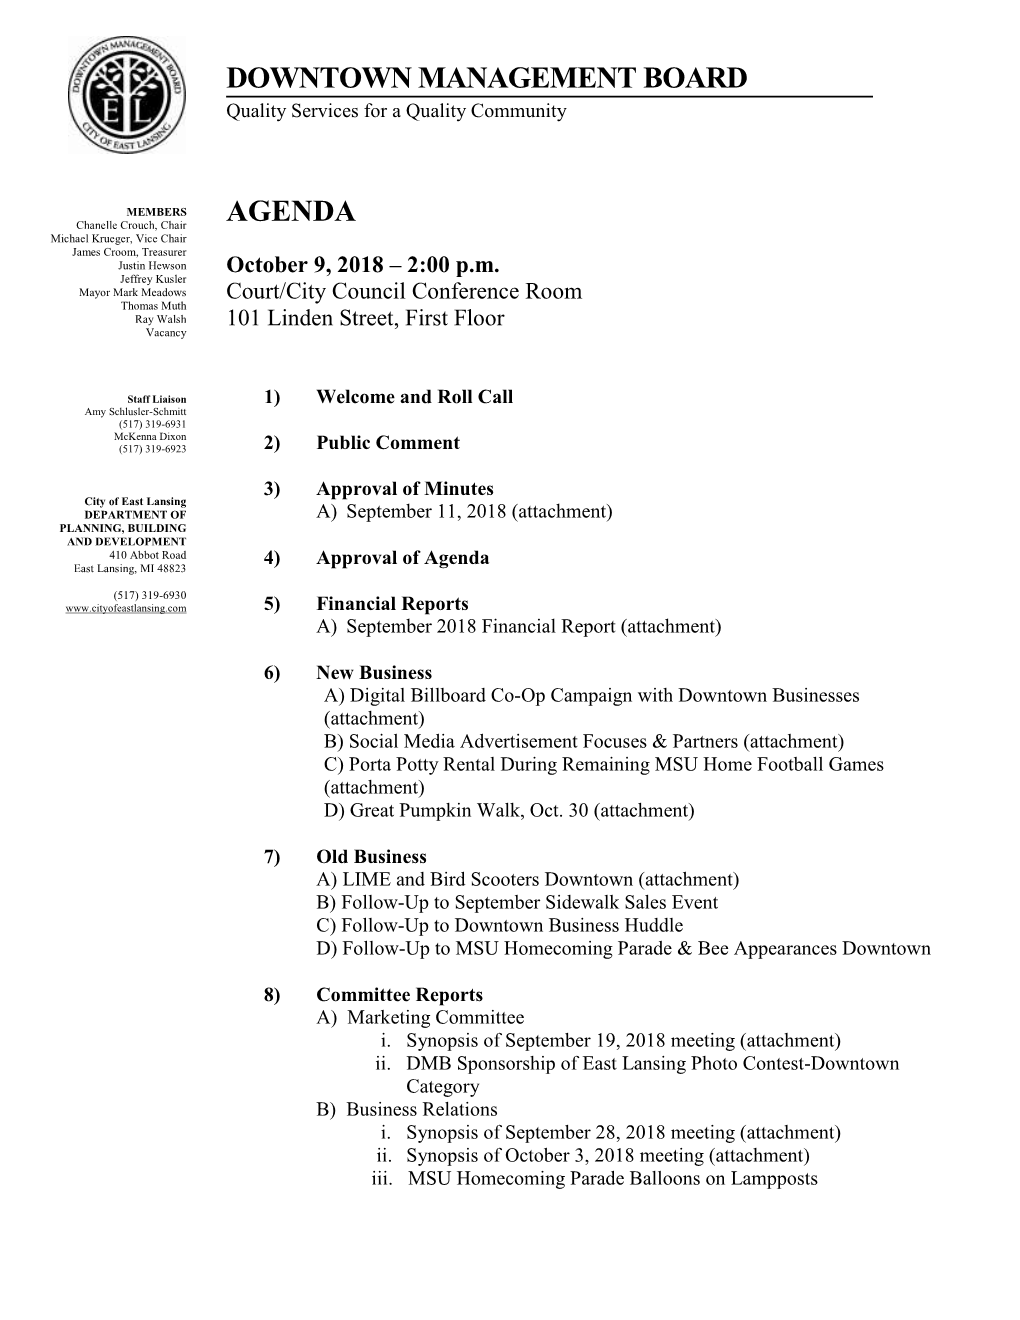 Downtown Management Board Agenda